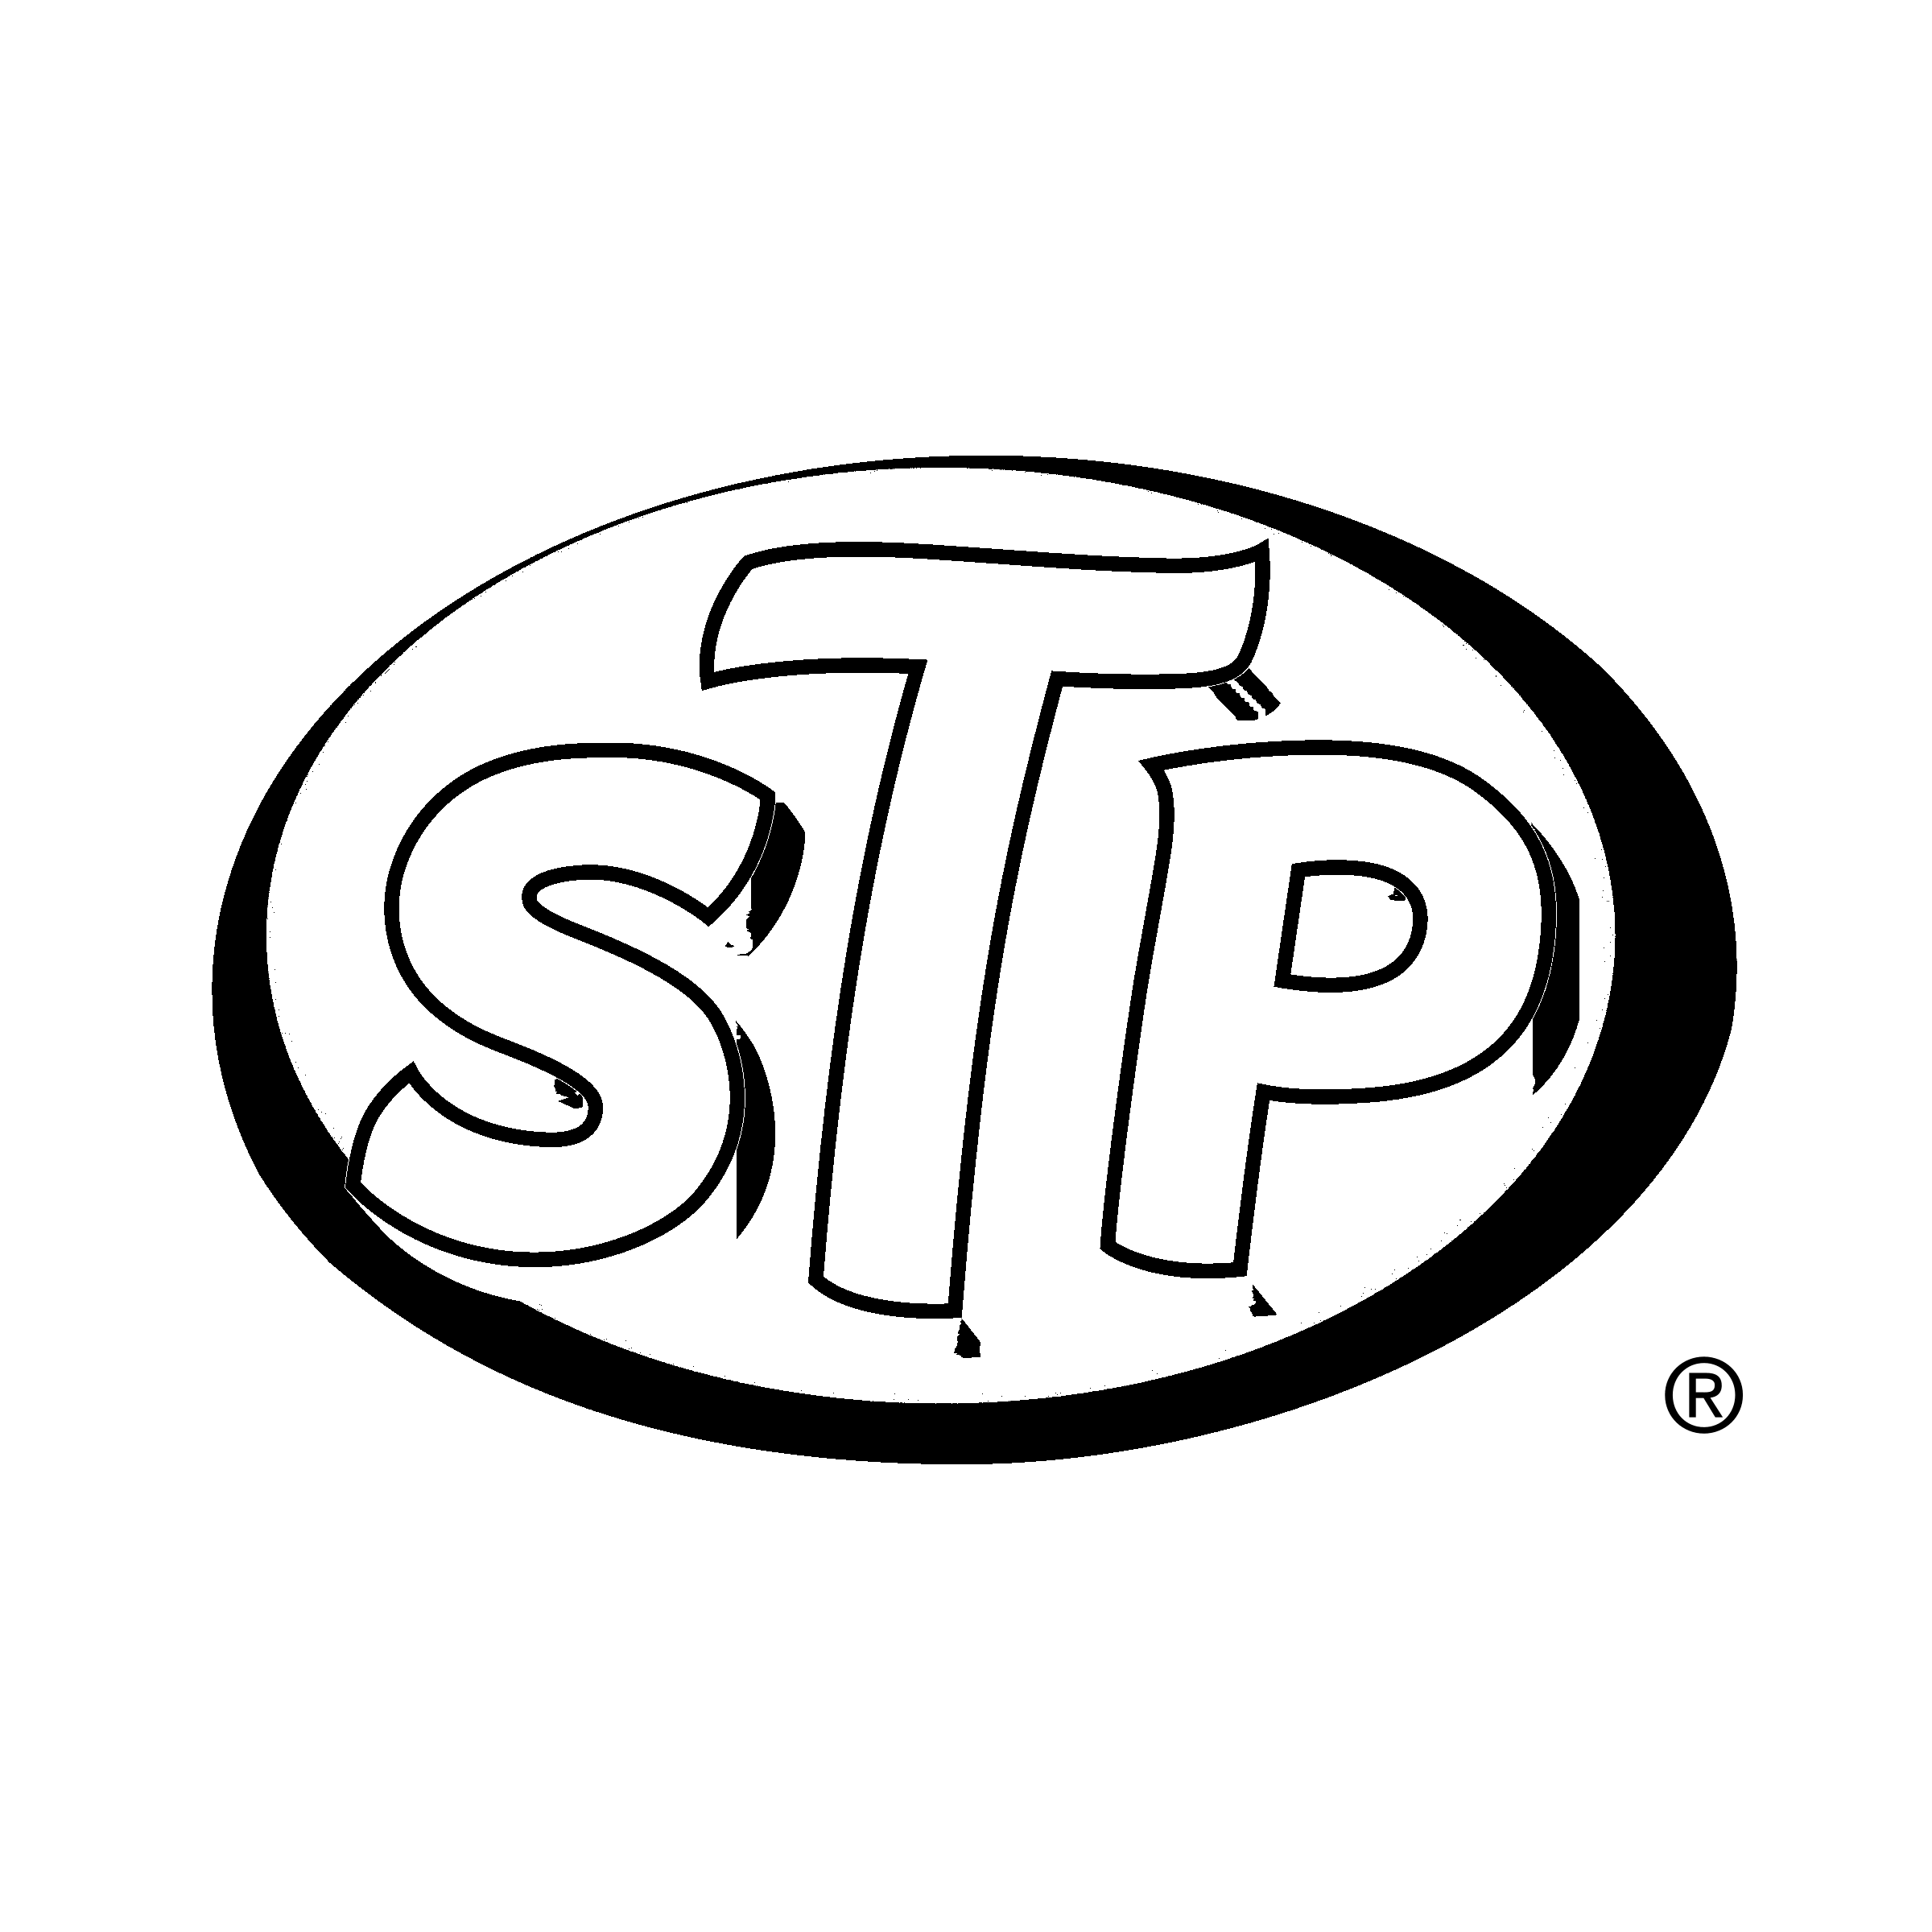 STP Logo - STP Logo PNG Transparent & SVG Vector